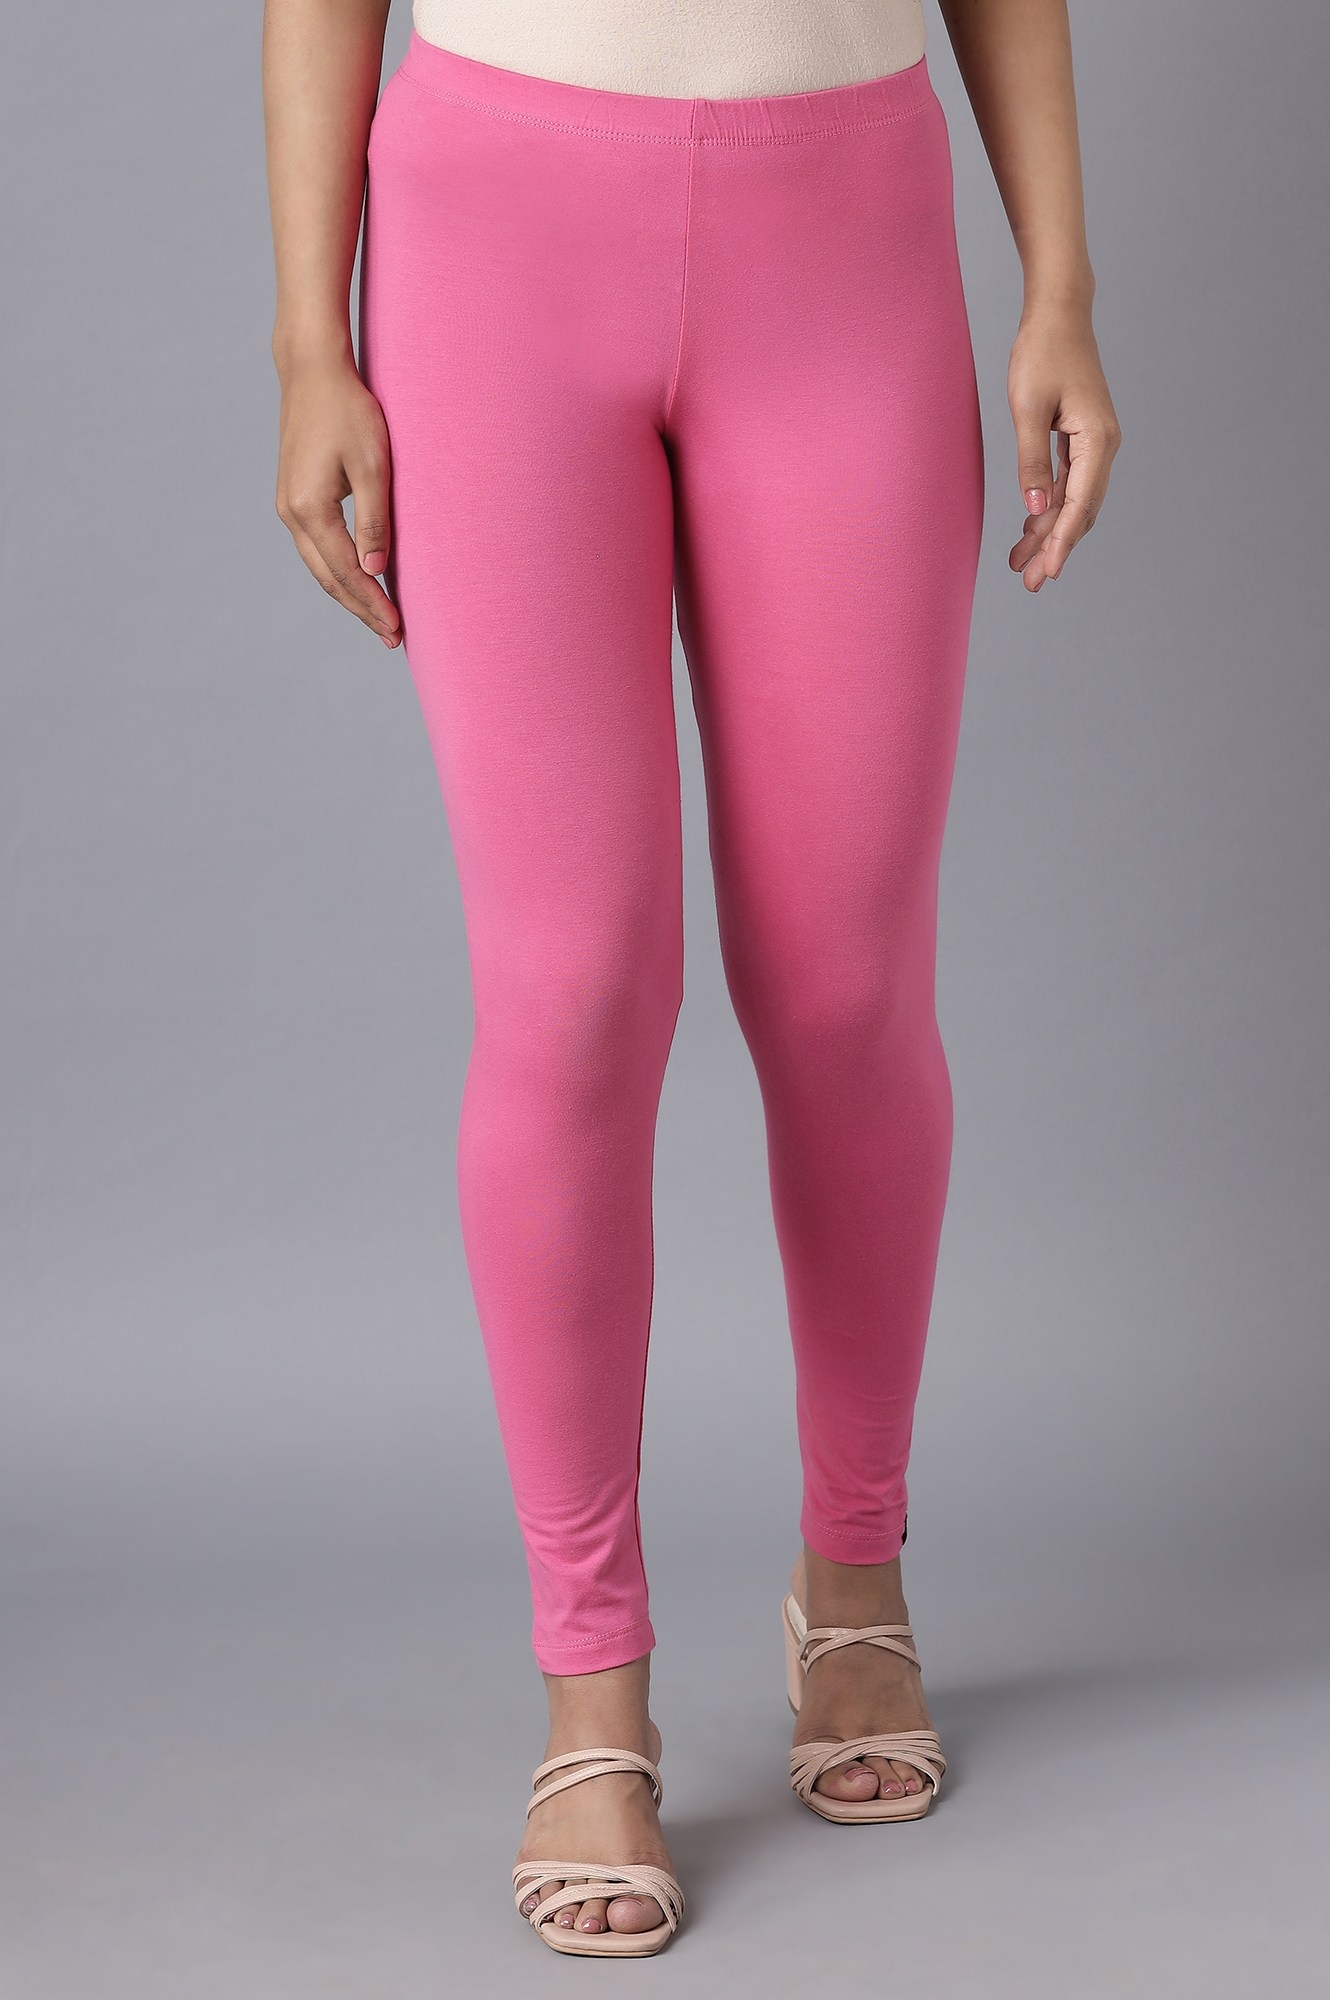 Elleven | Magenta Pink Cotton Lycra Tights